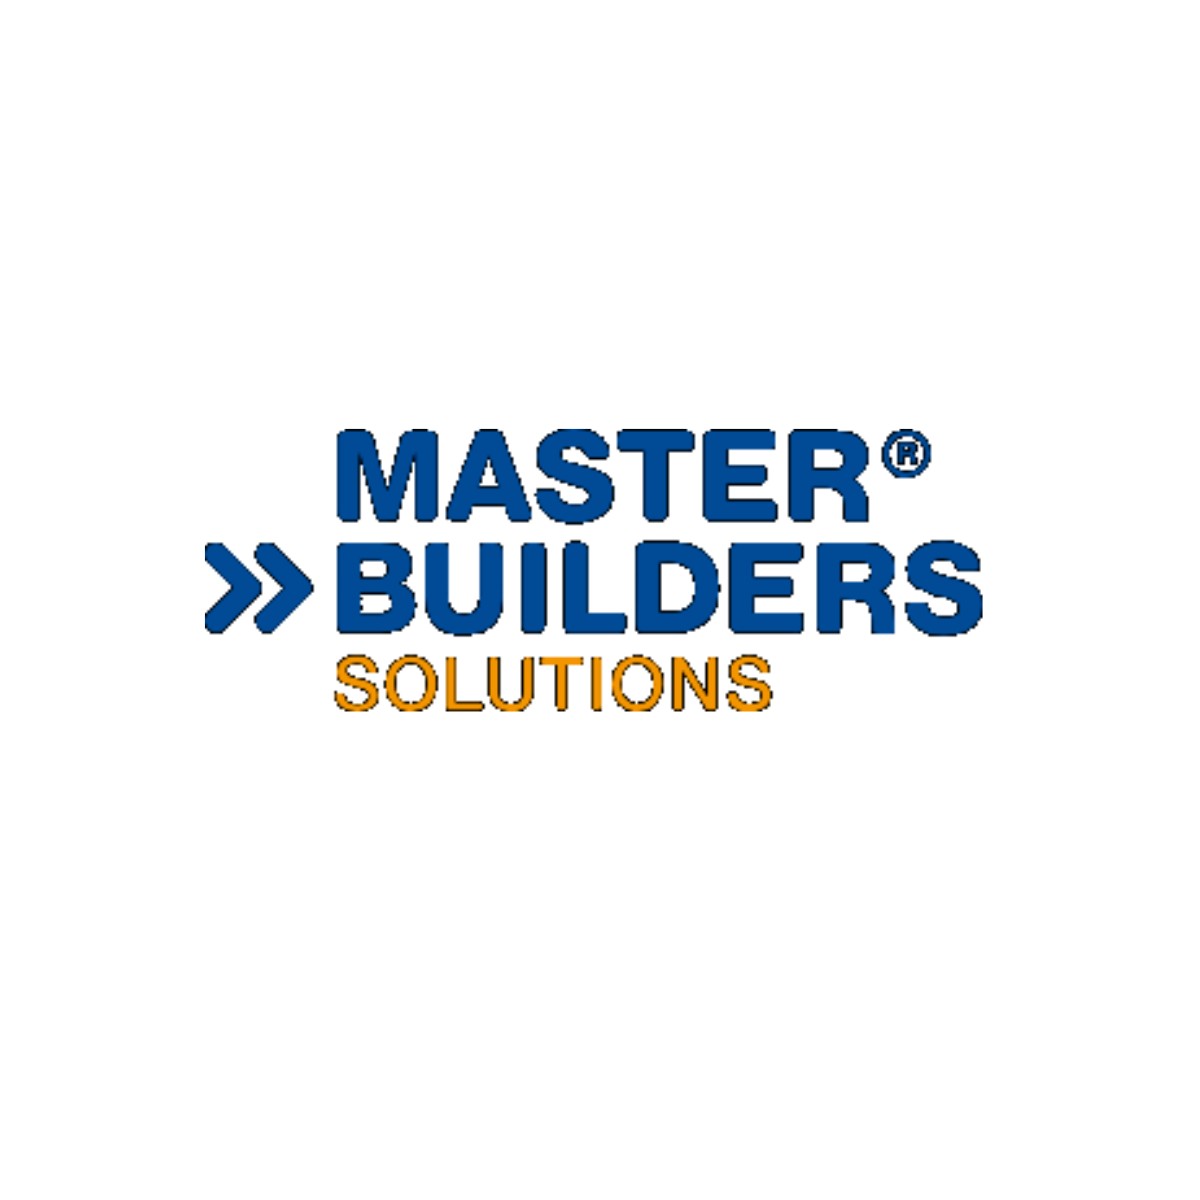 Master_building_solution